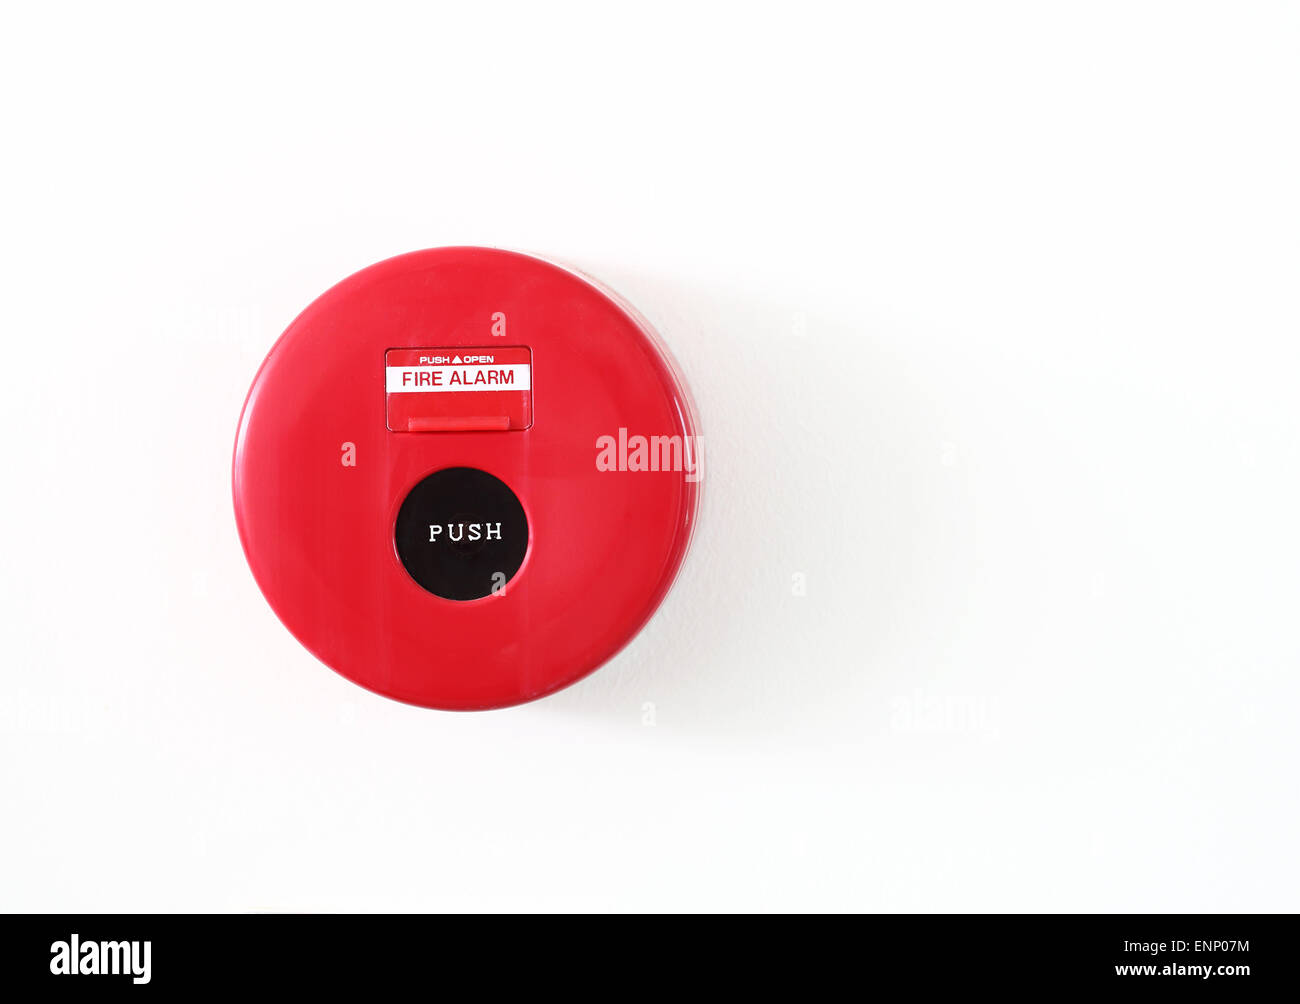 Fire alarm red circle box warning machine Stock Photo